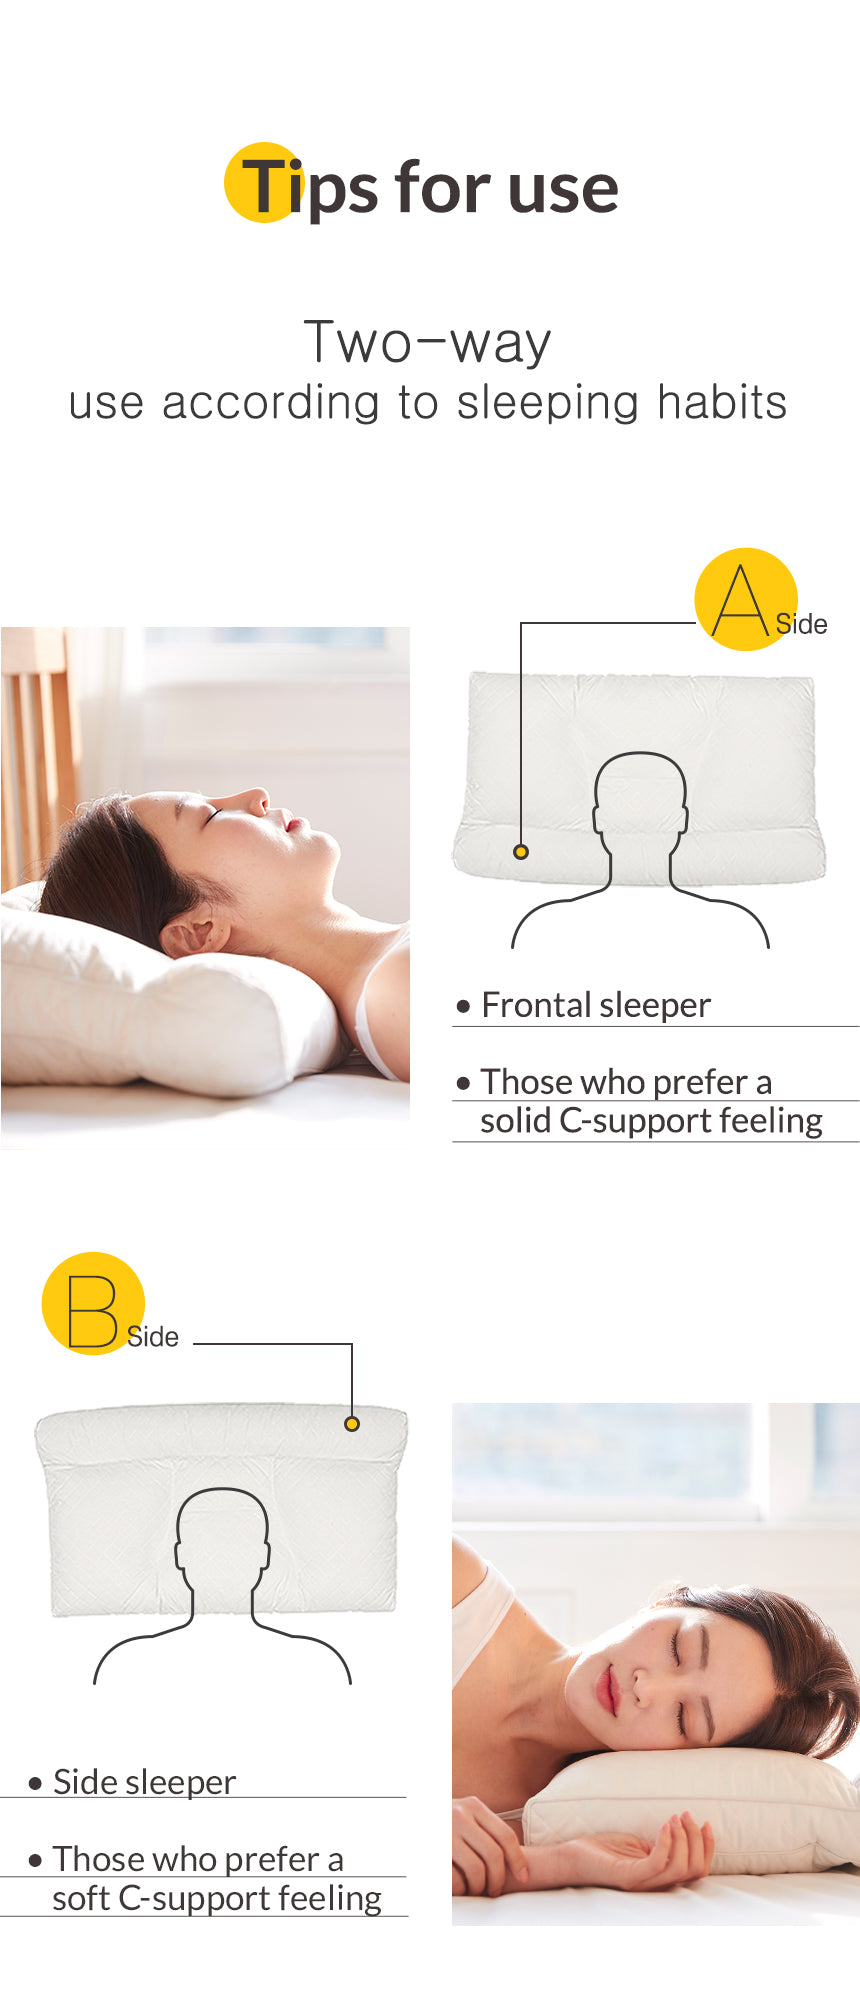 Milk Pillow use according to sleeping habits - Frontal sleeper, Side sleeper.